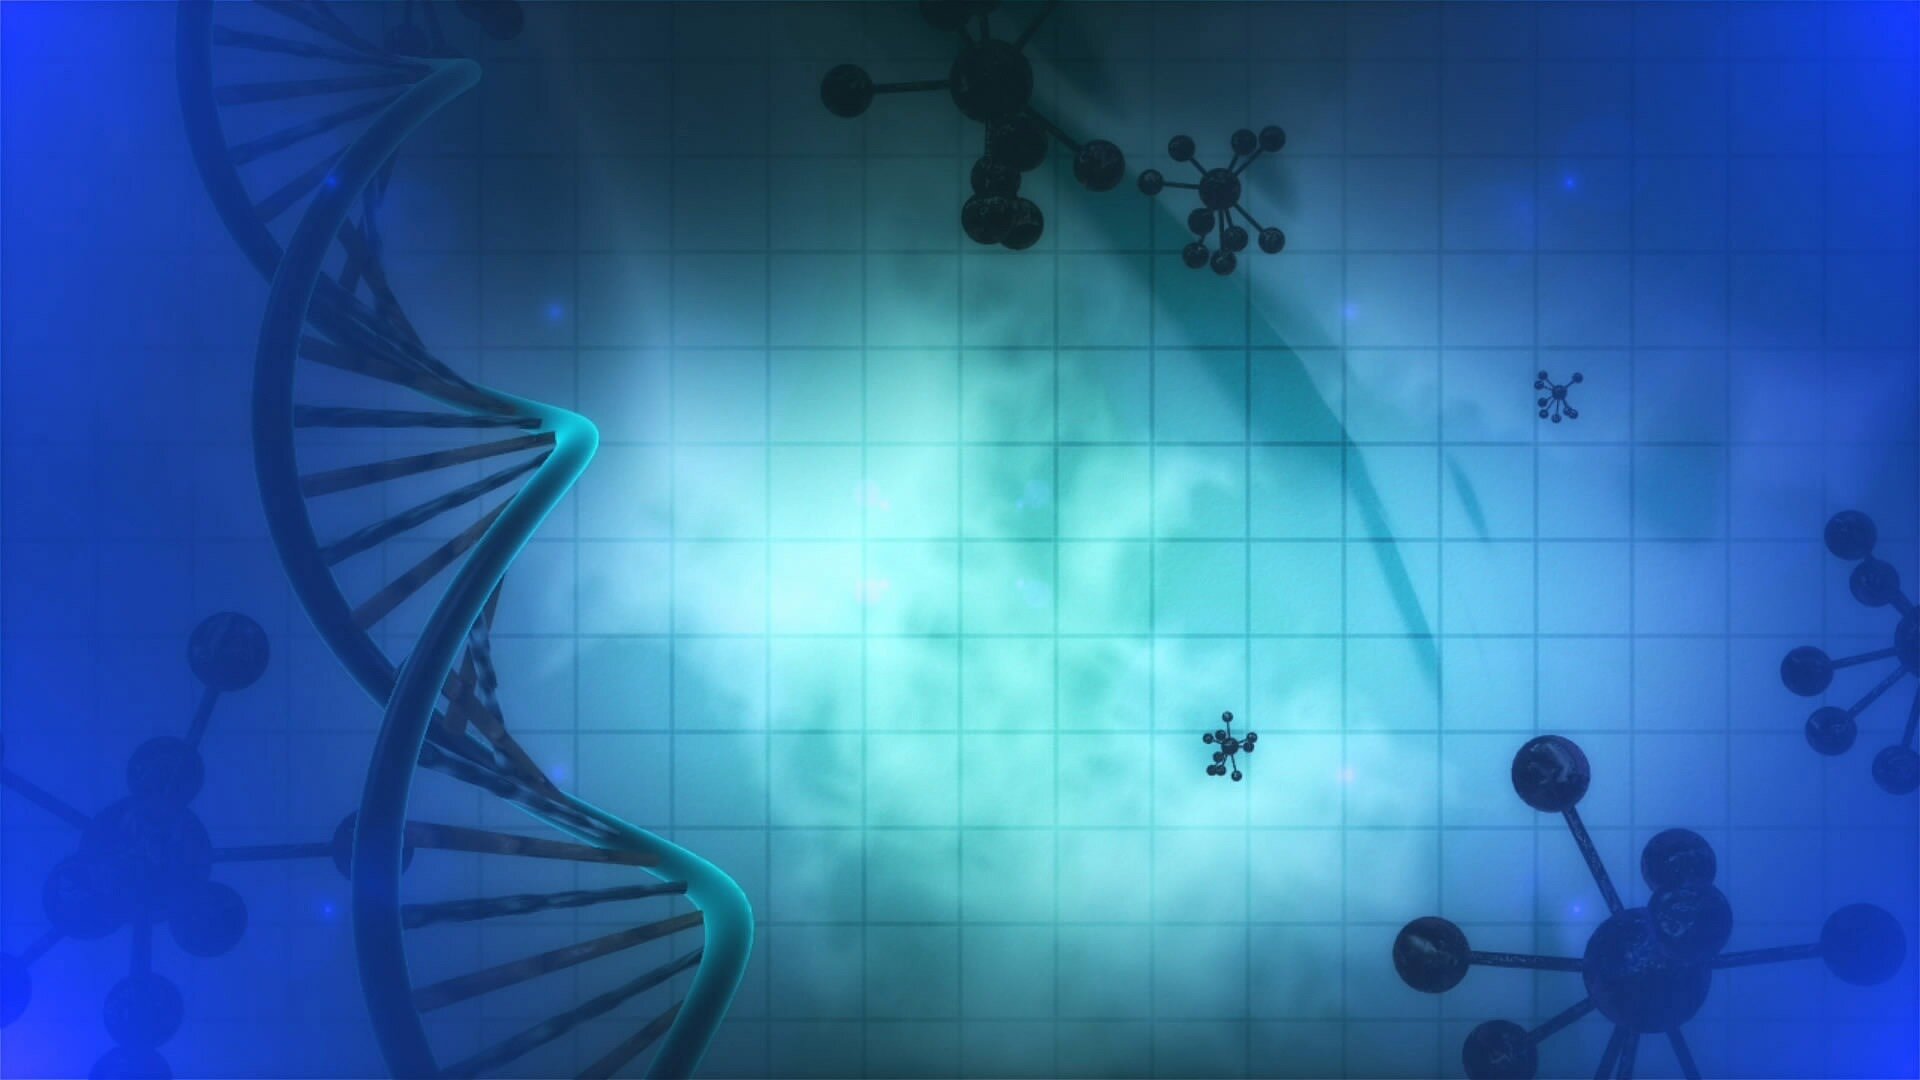 #From bridges to DNA: civil engineering across disciplines